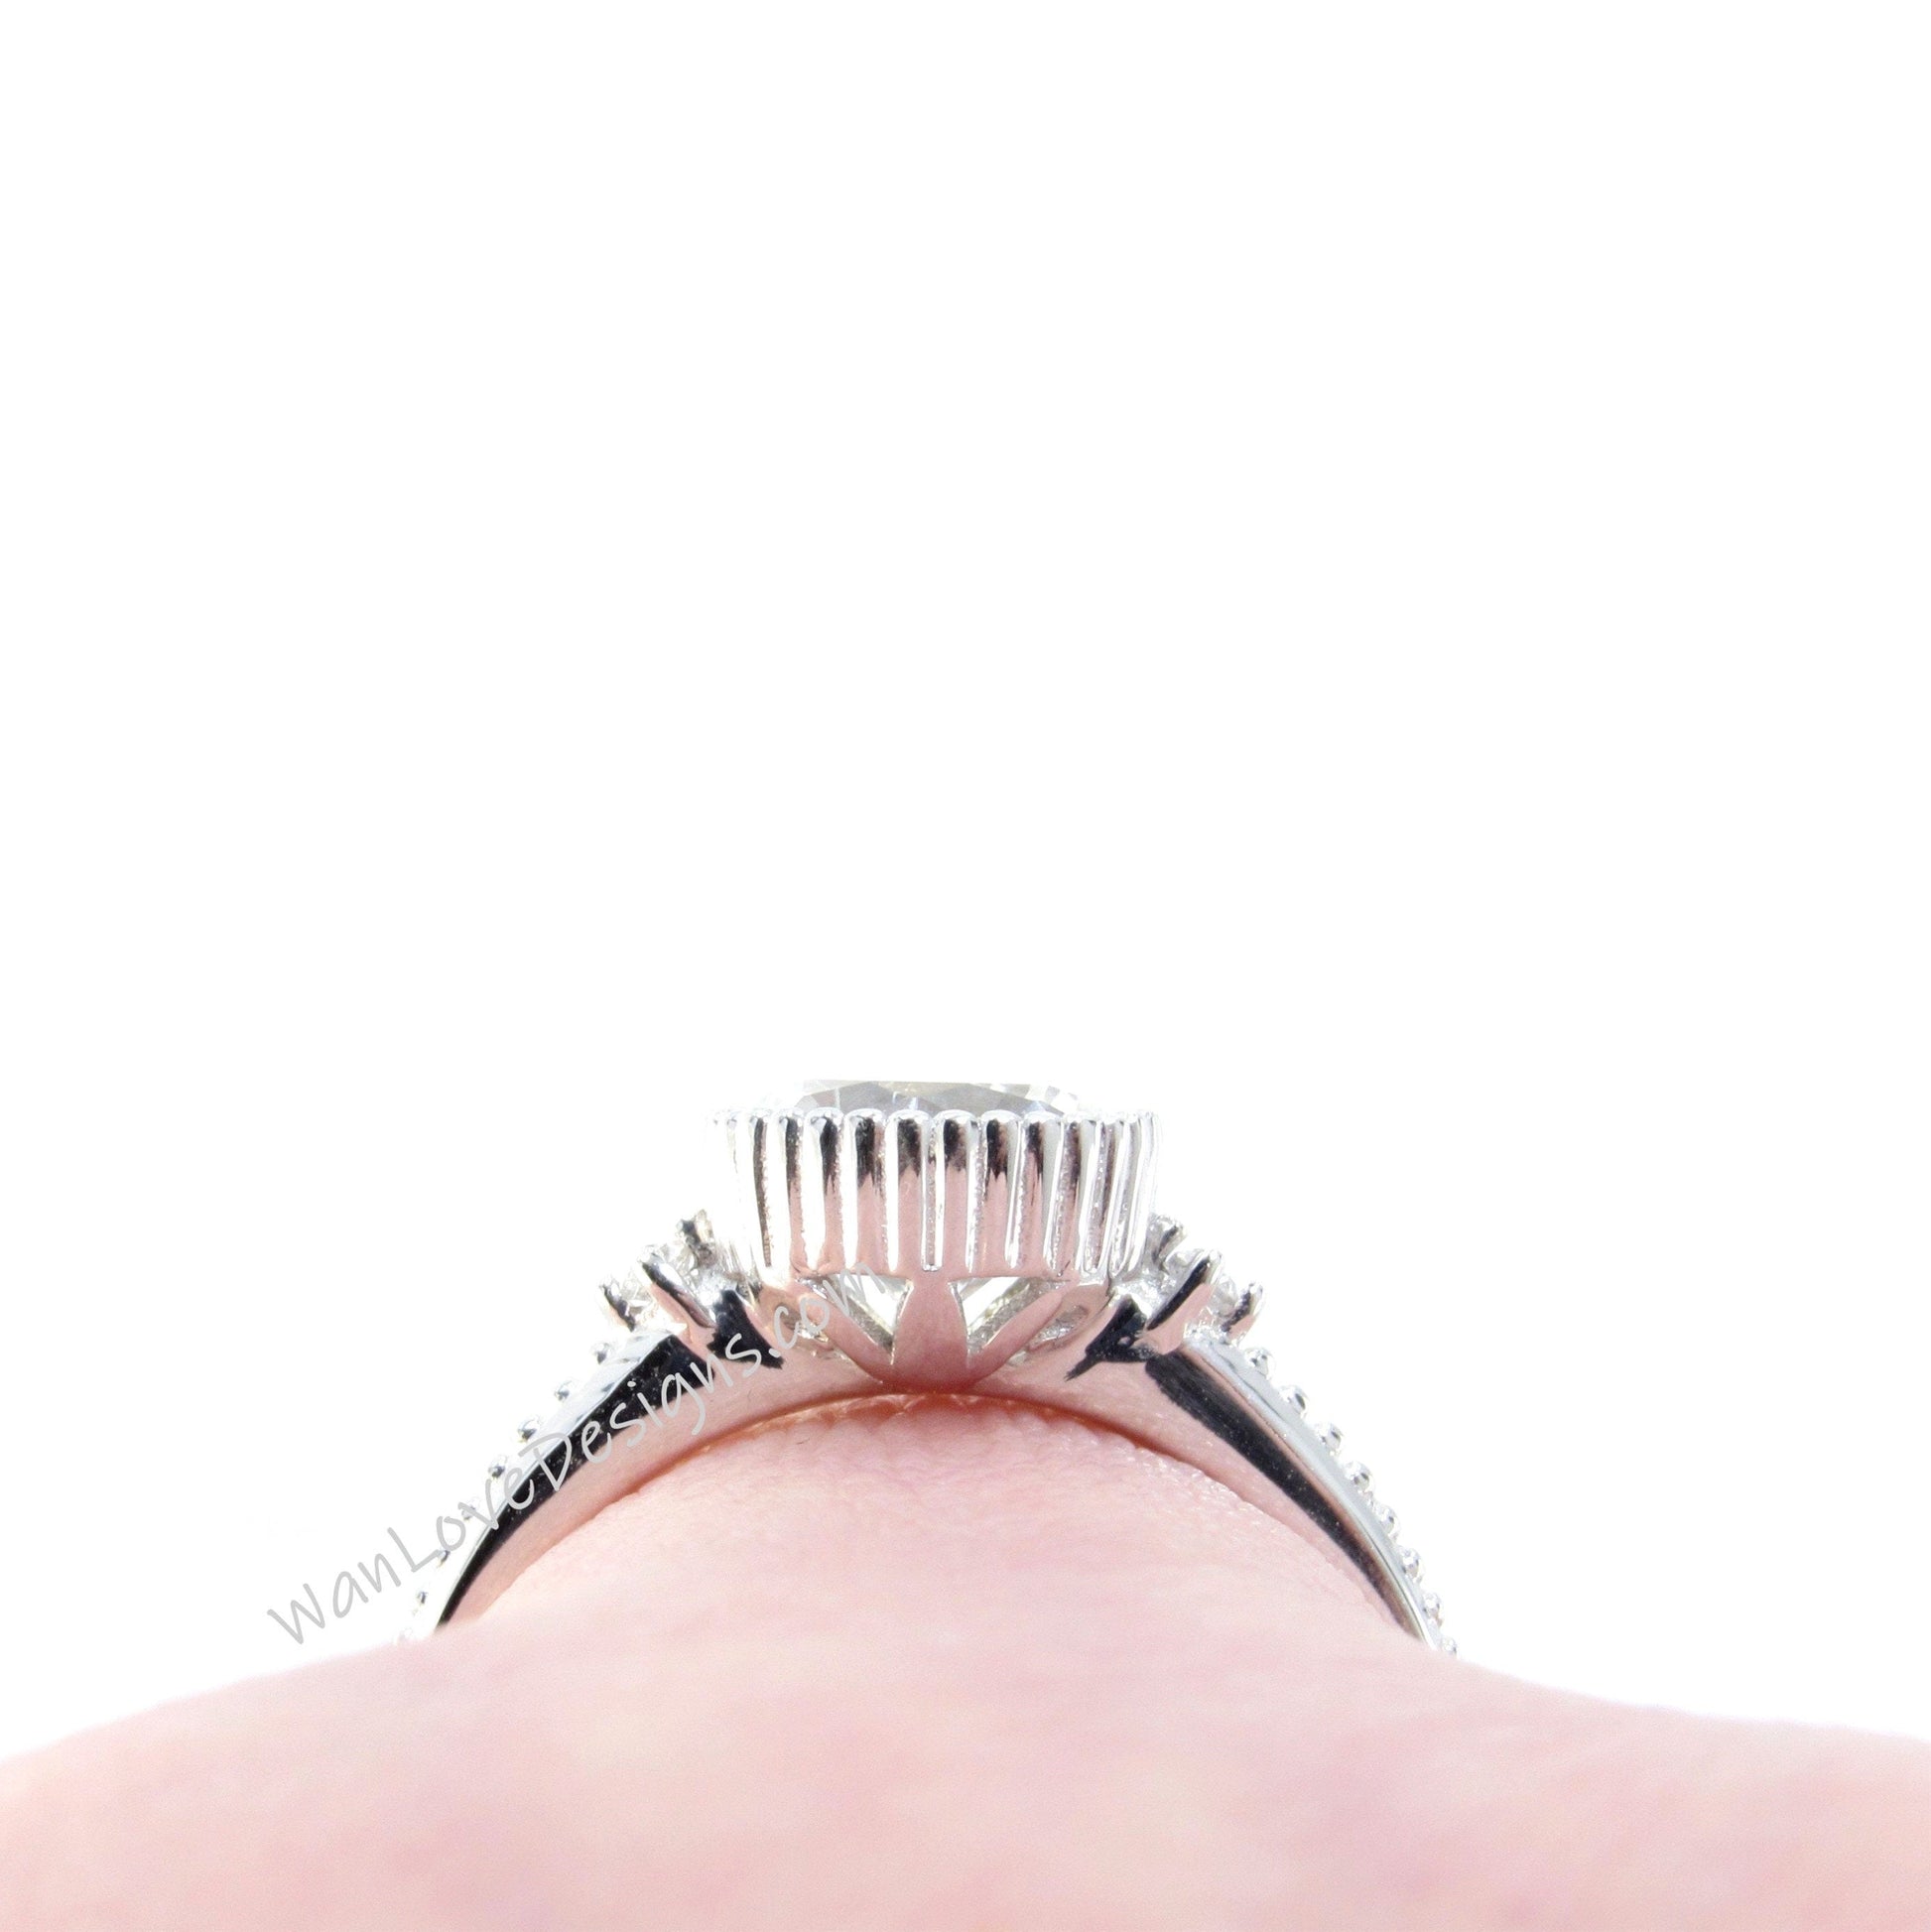 Ruby Diamond Milgrain Bezel Round 3 Gem stone Engagement Ring, Custom Wedding 14kt 18kt Gold, Platinum, WanLoveDesigns Wan Love Designs